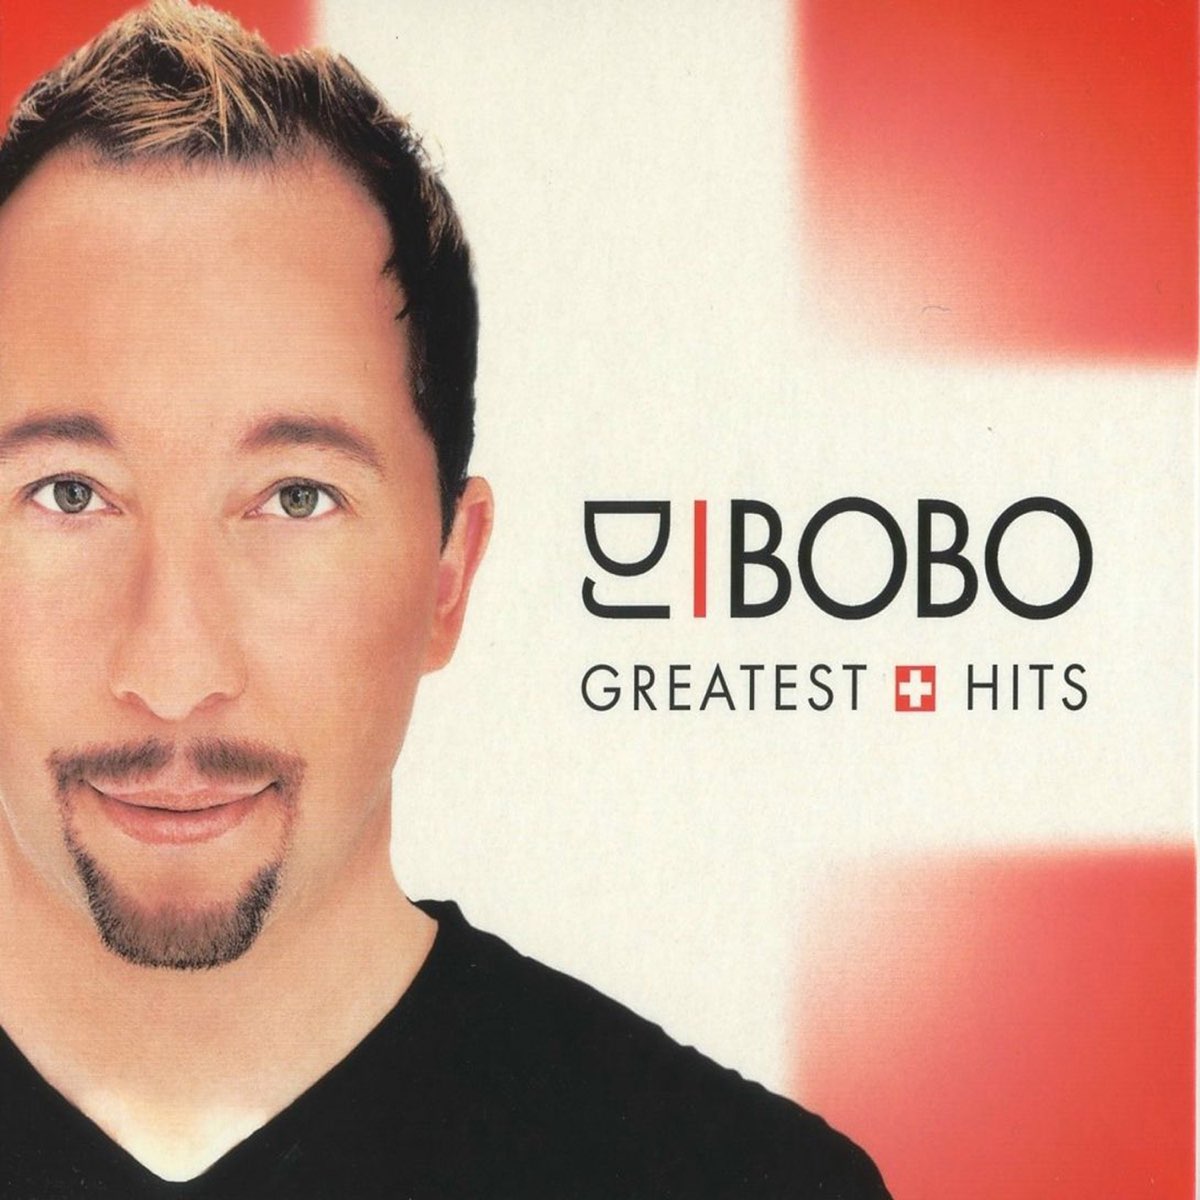 Бобо музыка. DJ Bobo обложка. DJ Bobo "Greatest Hits". DJ Bobo Постер. Дж бобо фото.